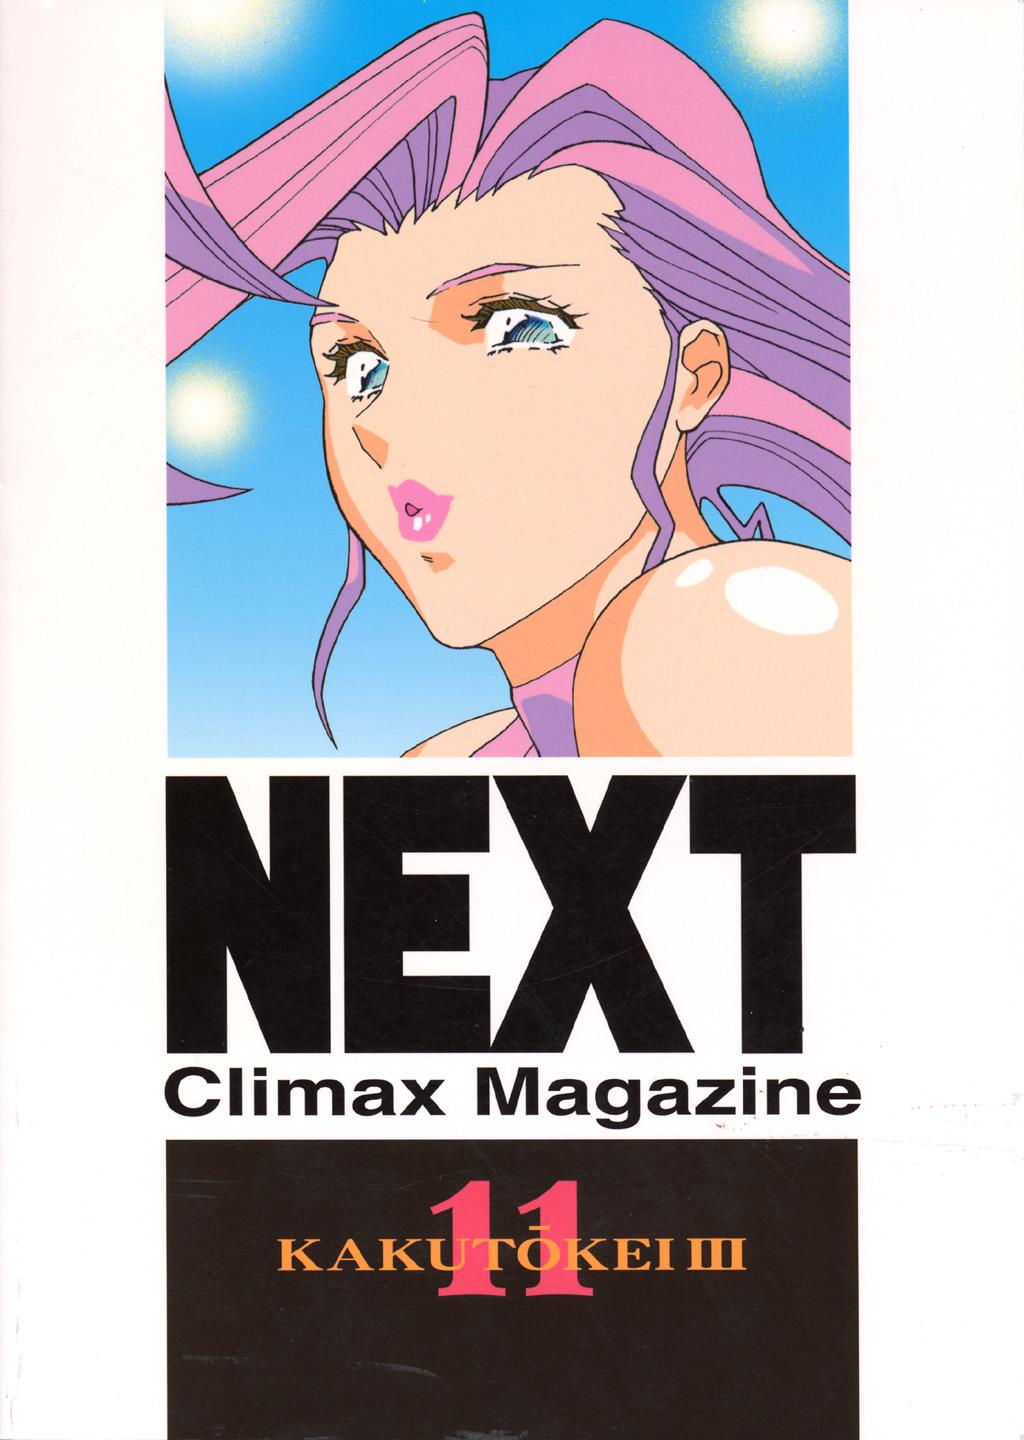 Pornstar Next Climax Magazine 11 - Kakutokei III - Street fighter Dead or alive The legend of zelda Calcinha - Page 98